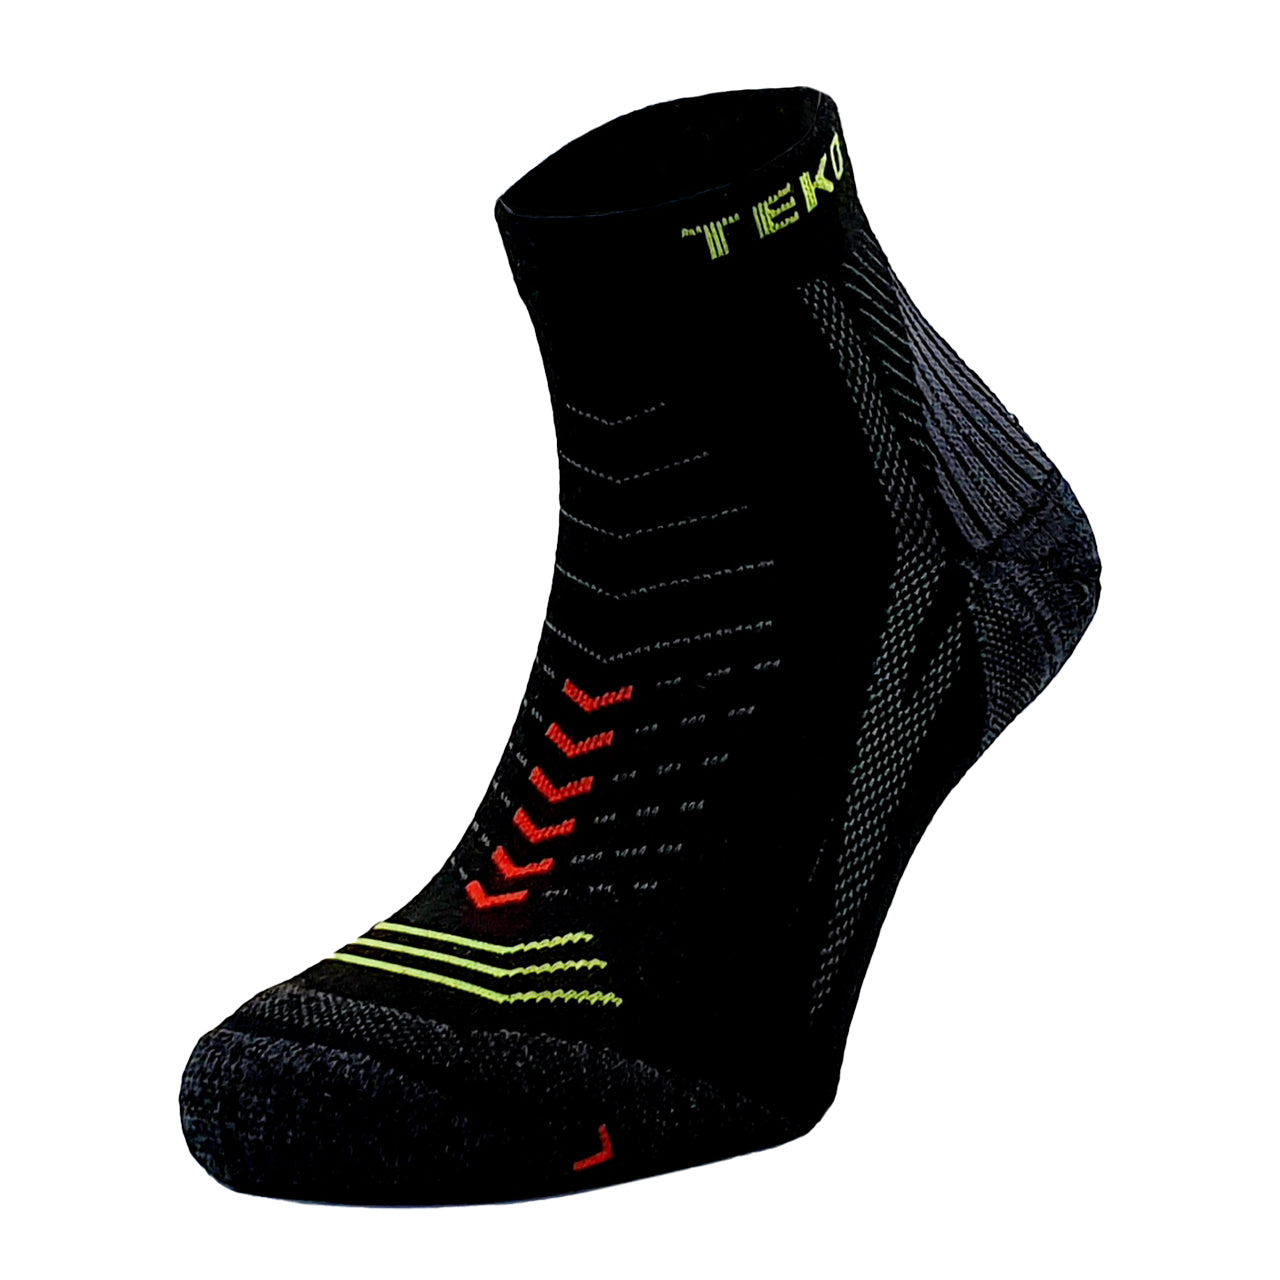 Teko Merino Light Hiking Socks - TEKO USA